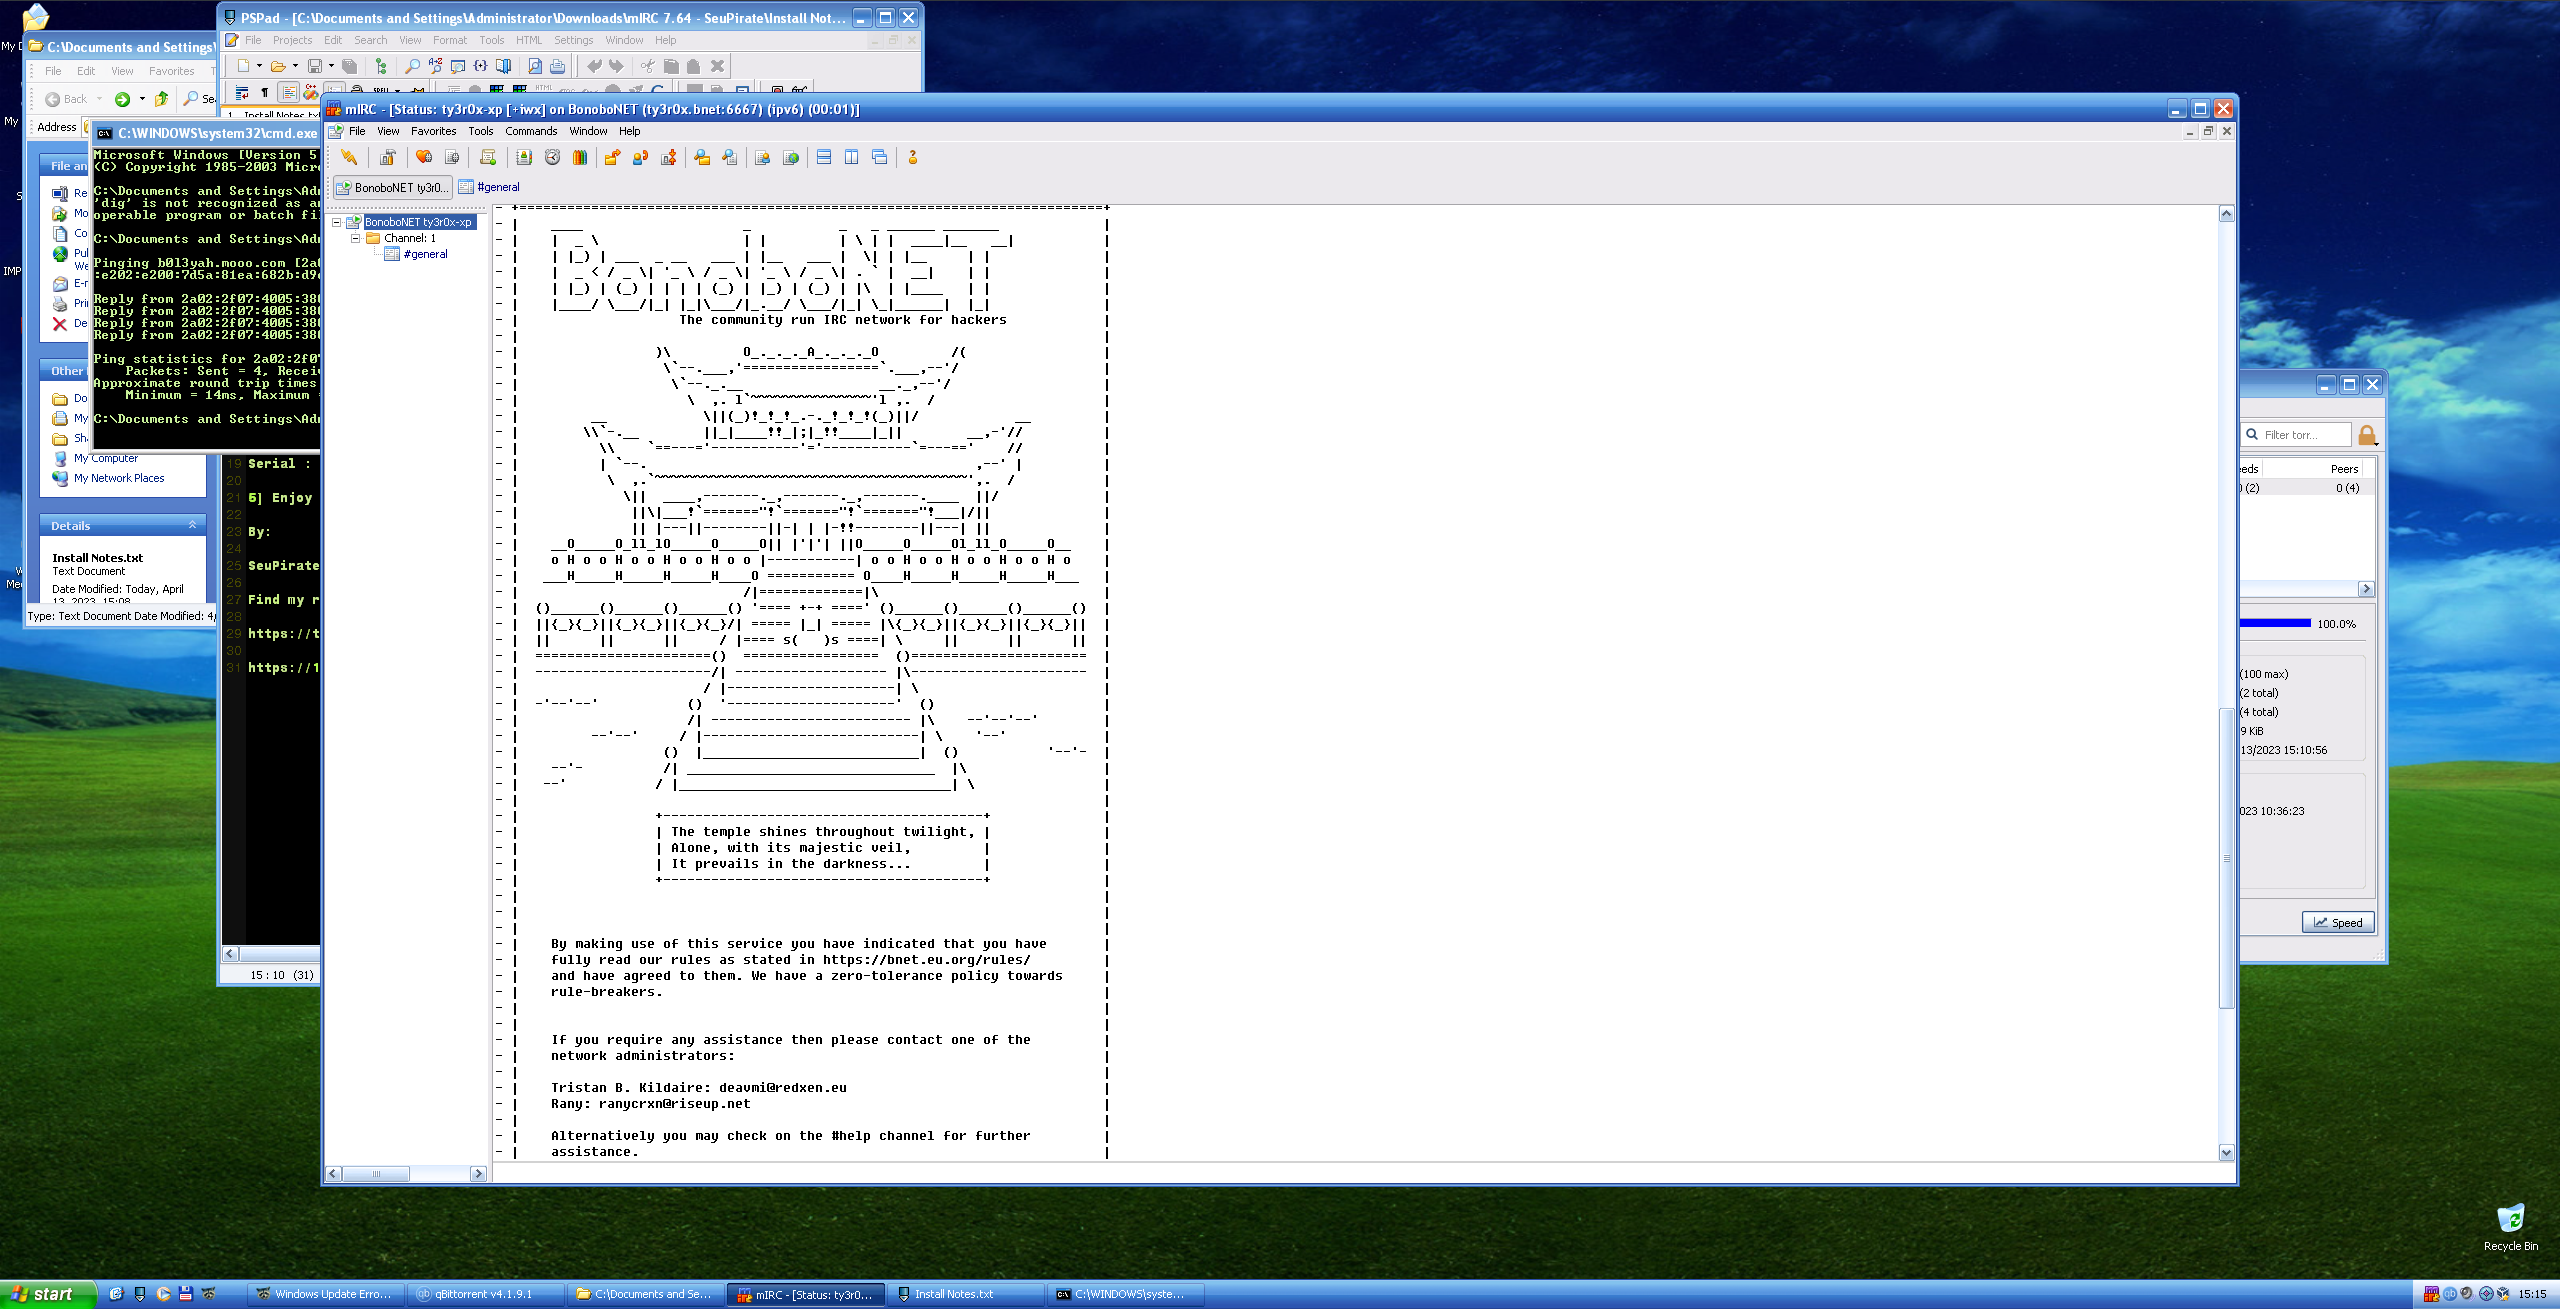 BNET on mirc running on Windows XP via ipv6